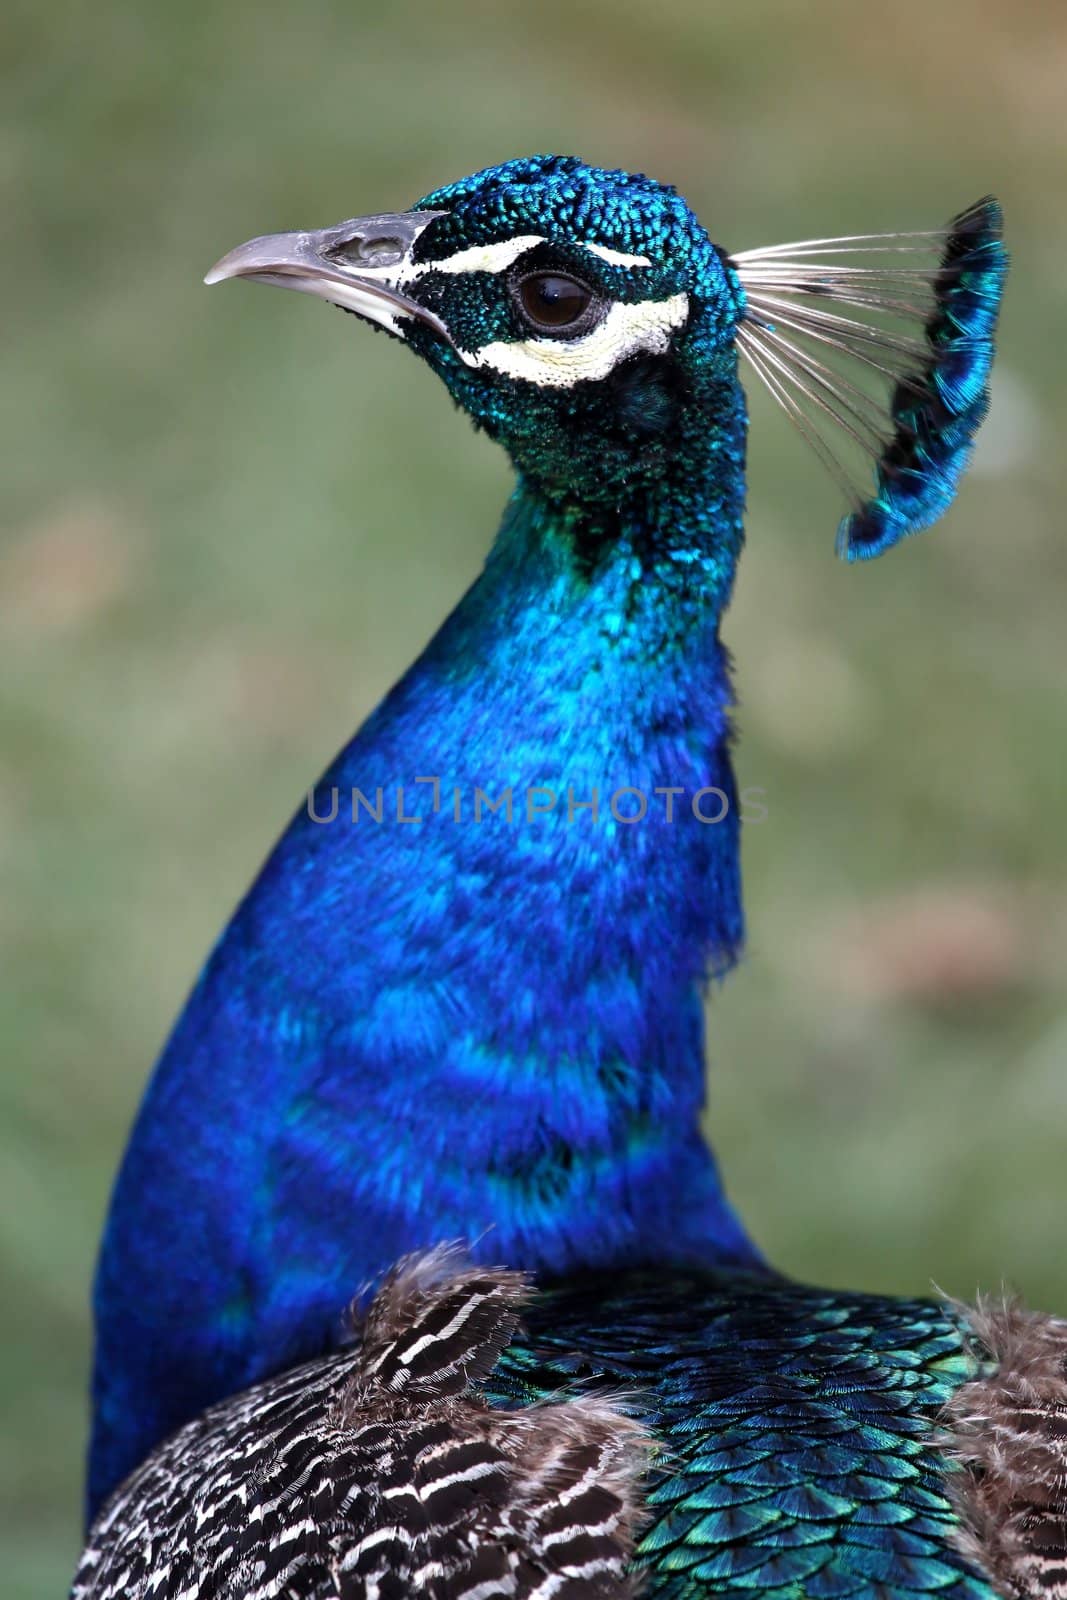 Portrait of a beautiful blue male peacock bird